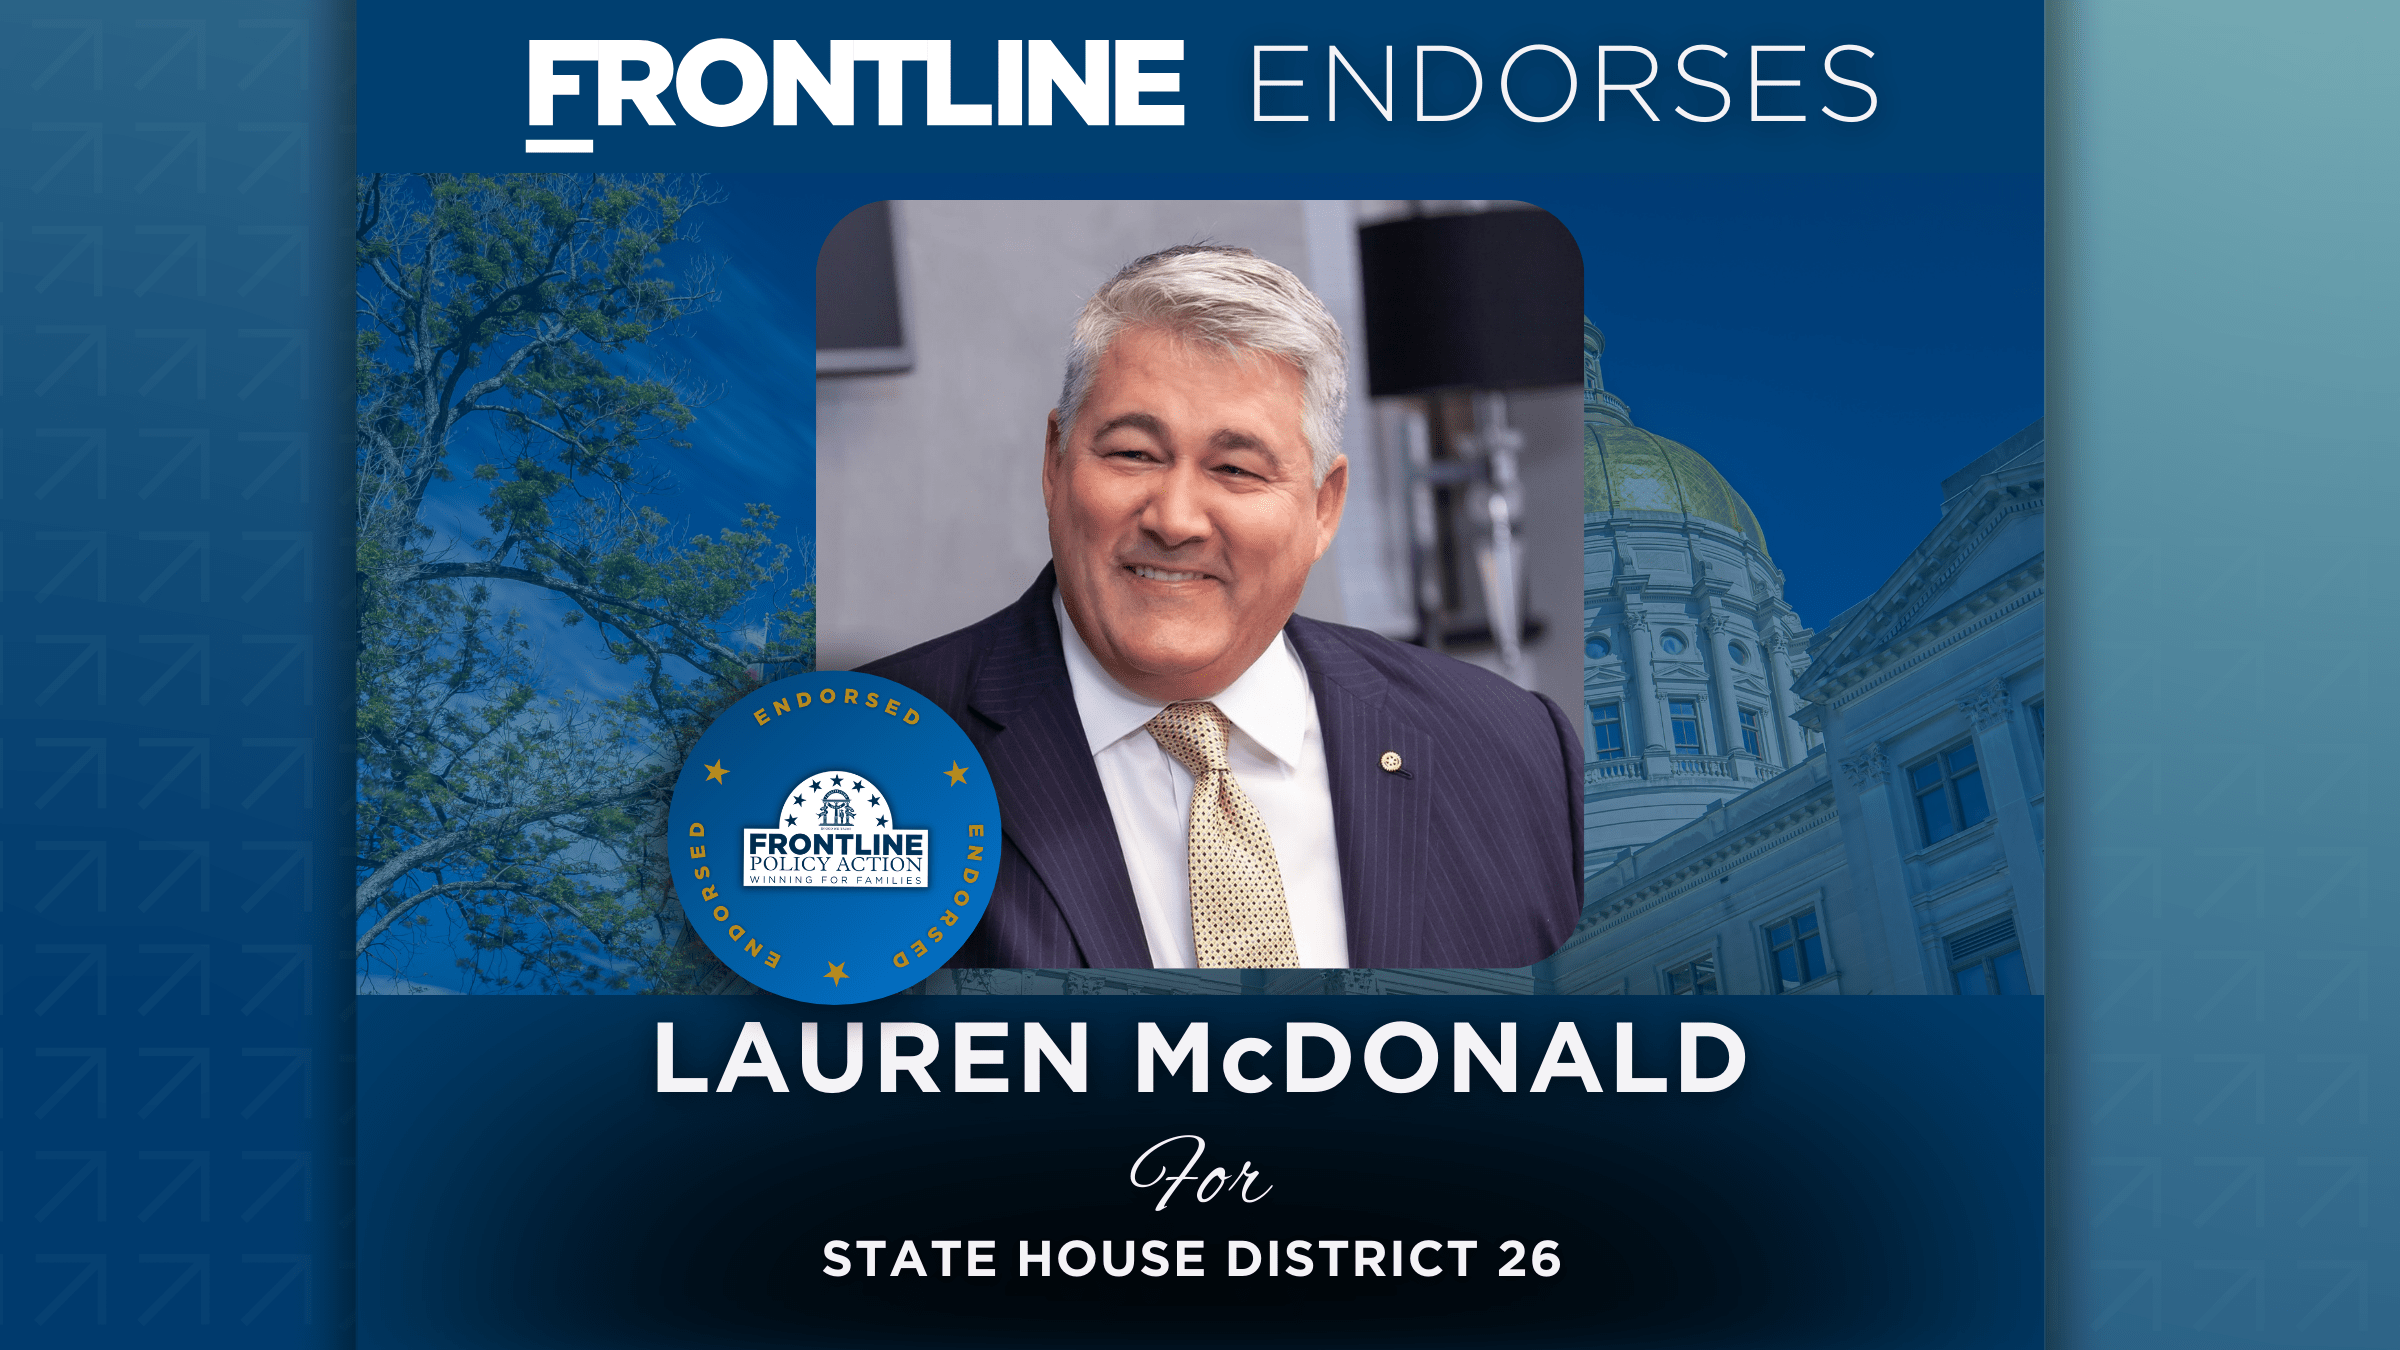 BREAKING: Frontline Endorses Lauren McDonald for State House District 26